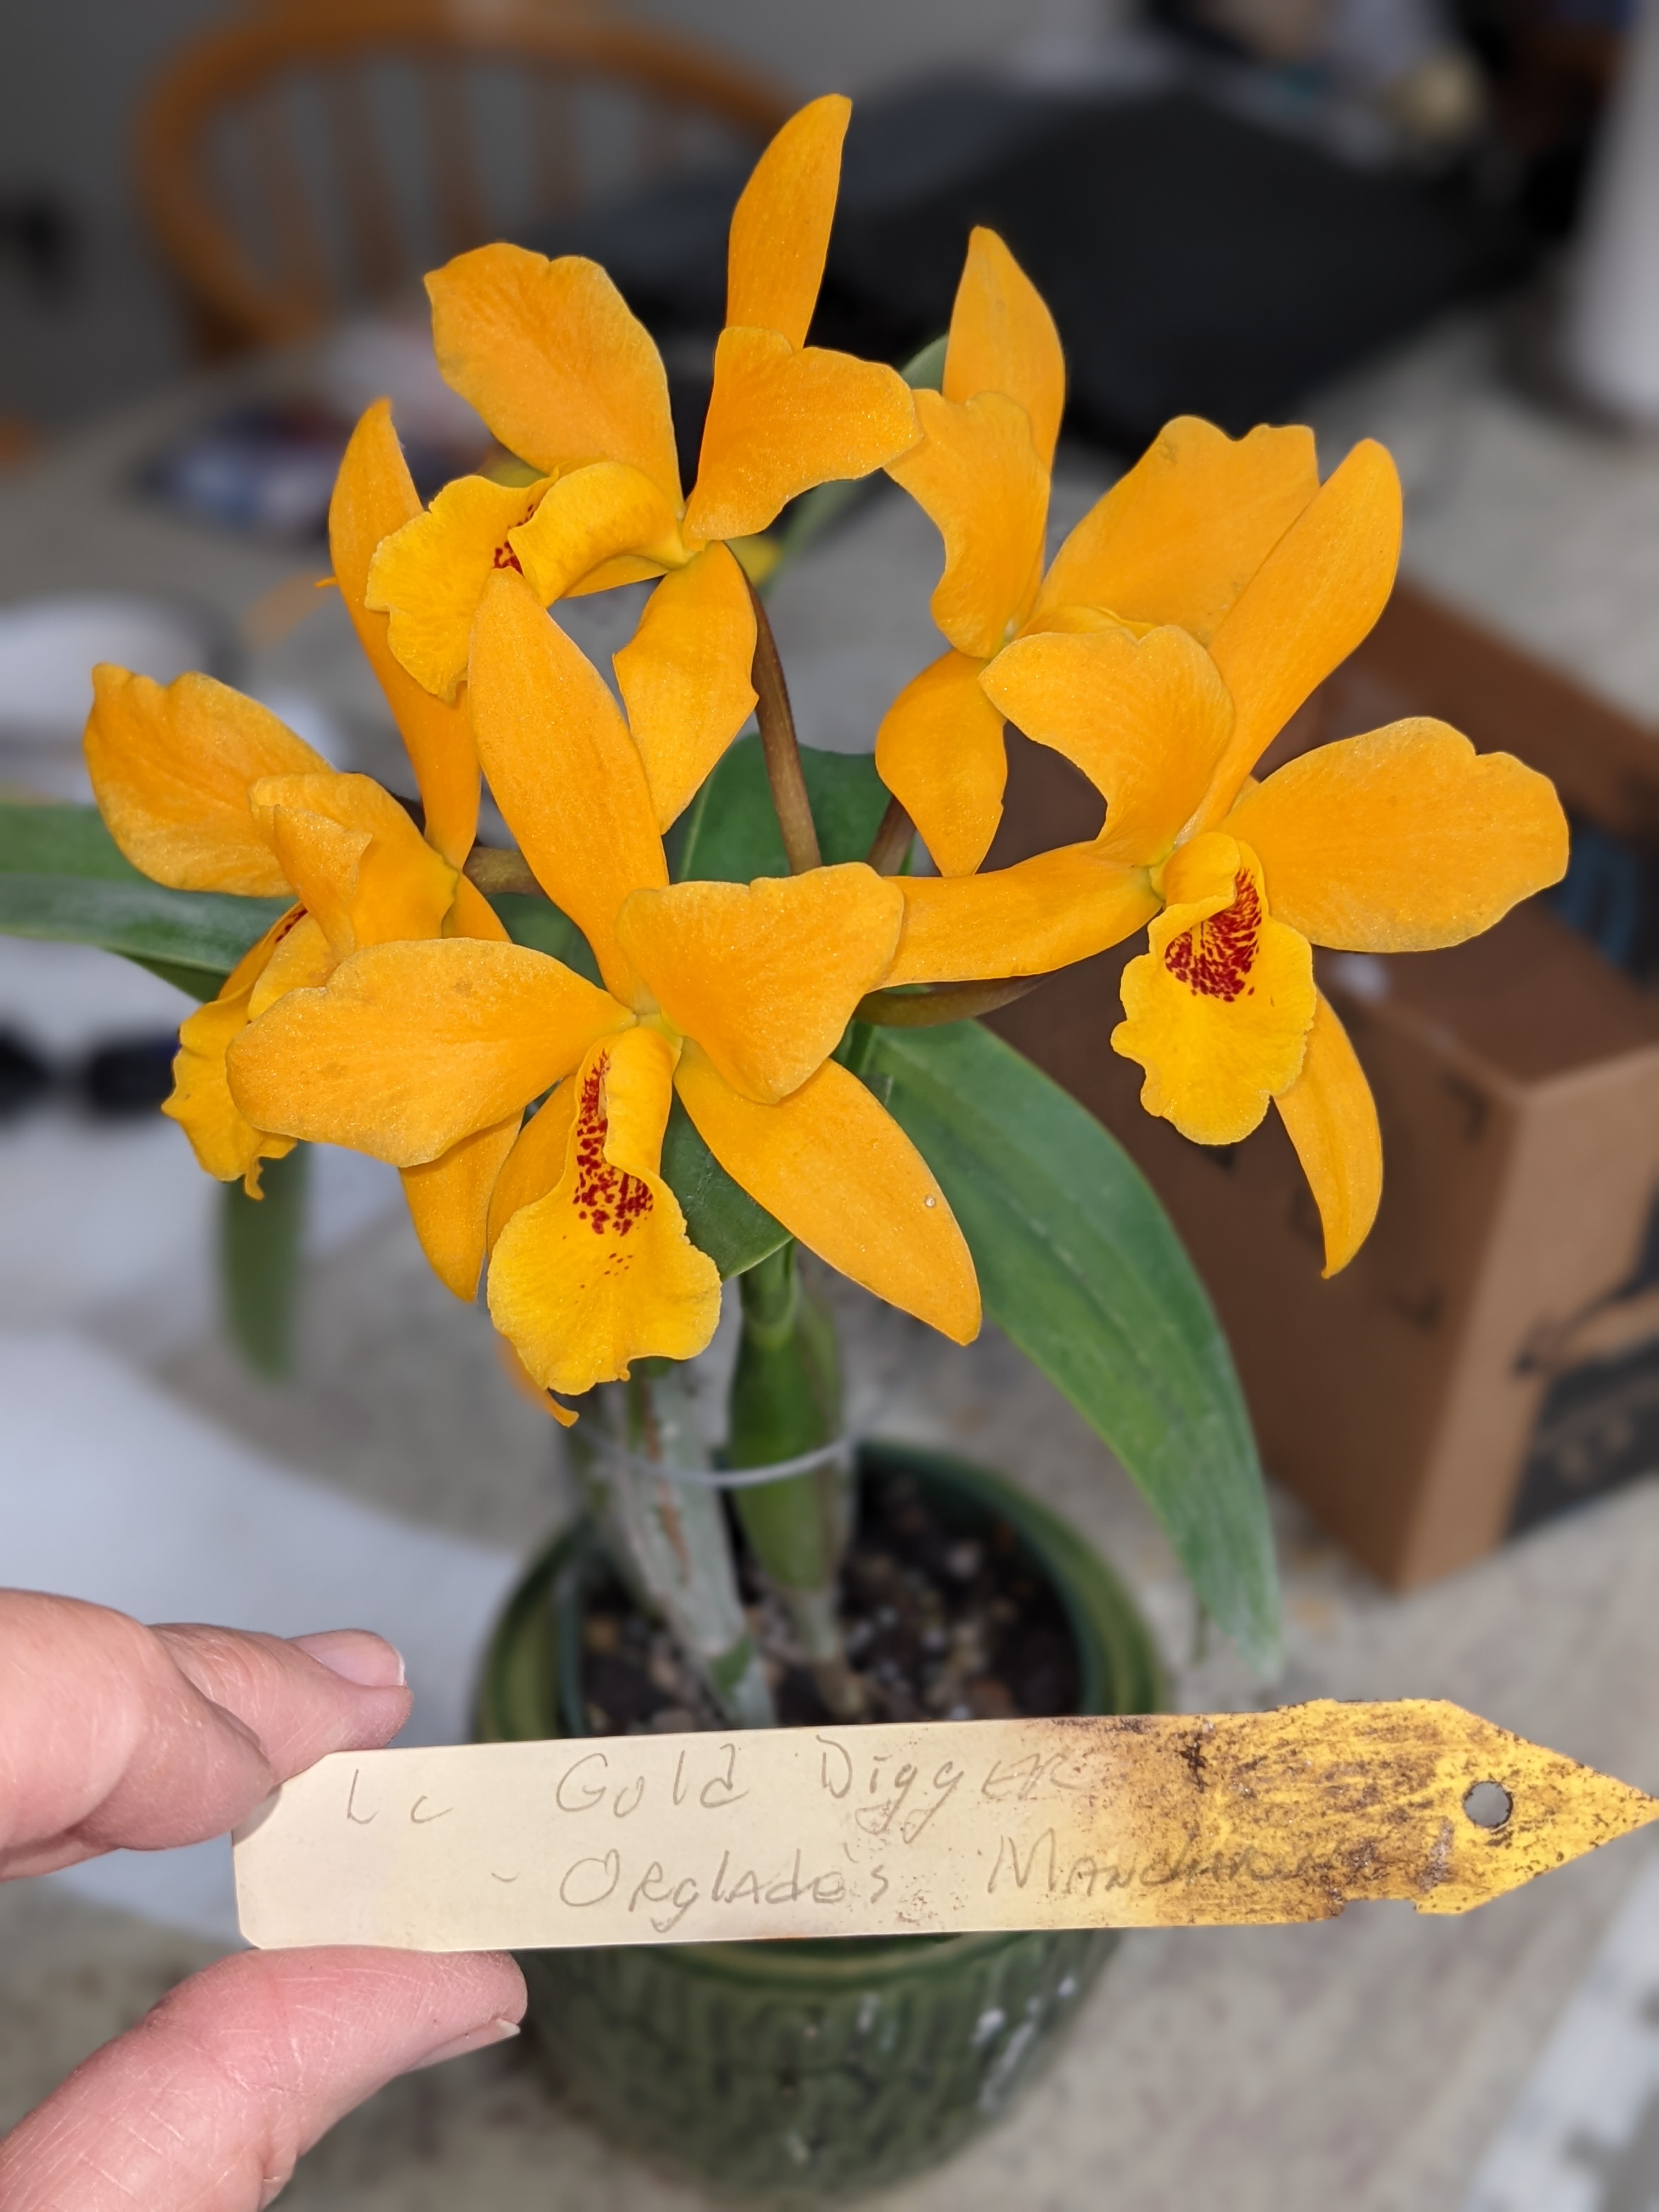 Ctt Gold Digger Orglades Mandarin blooming